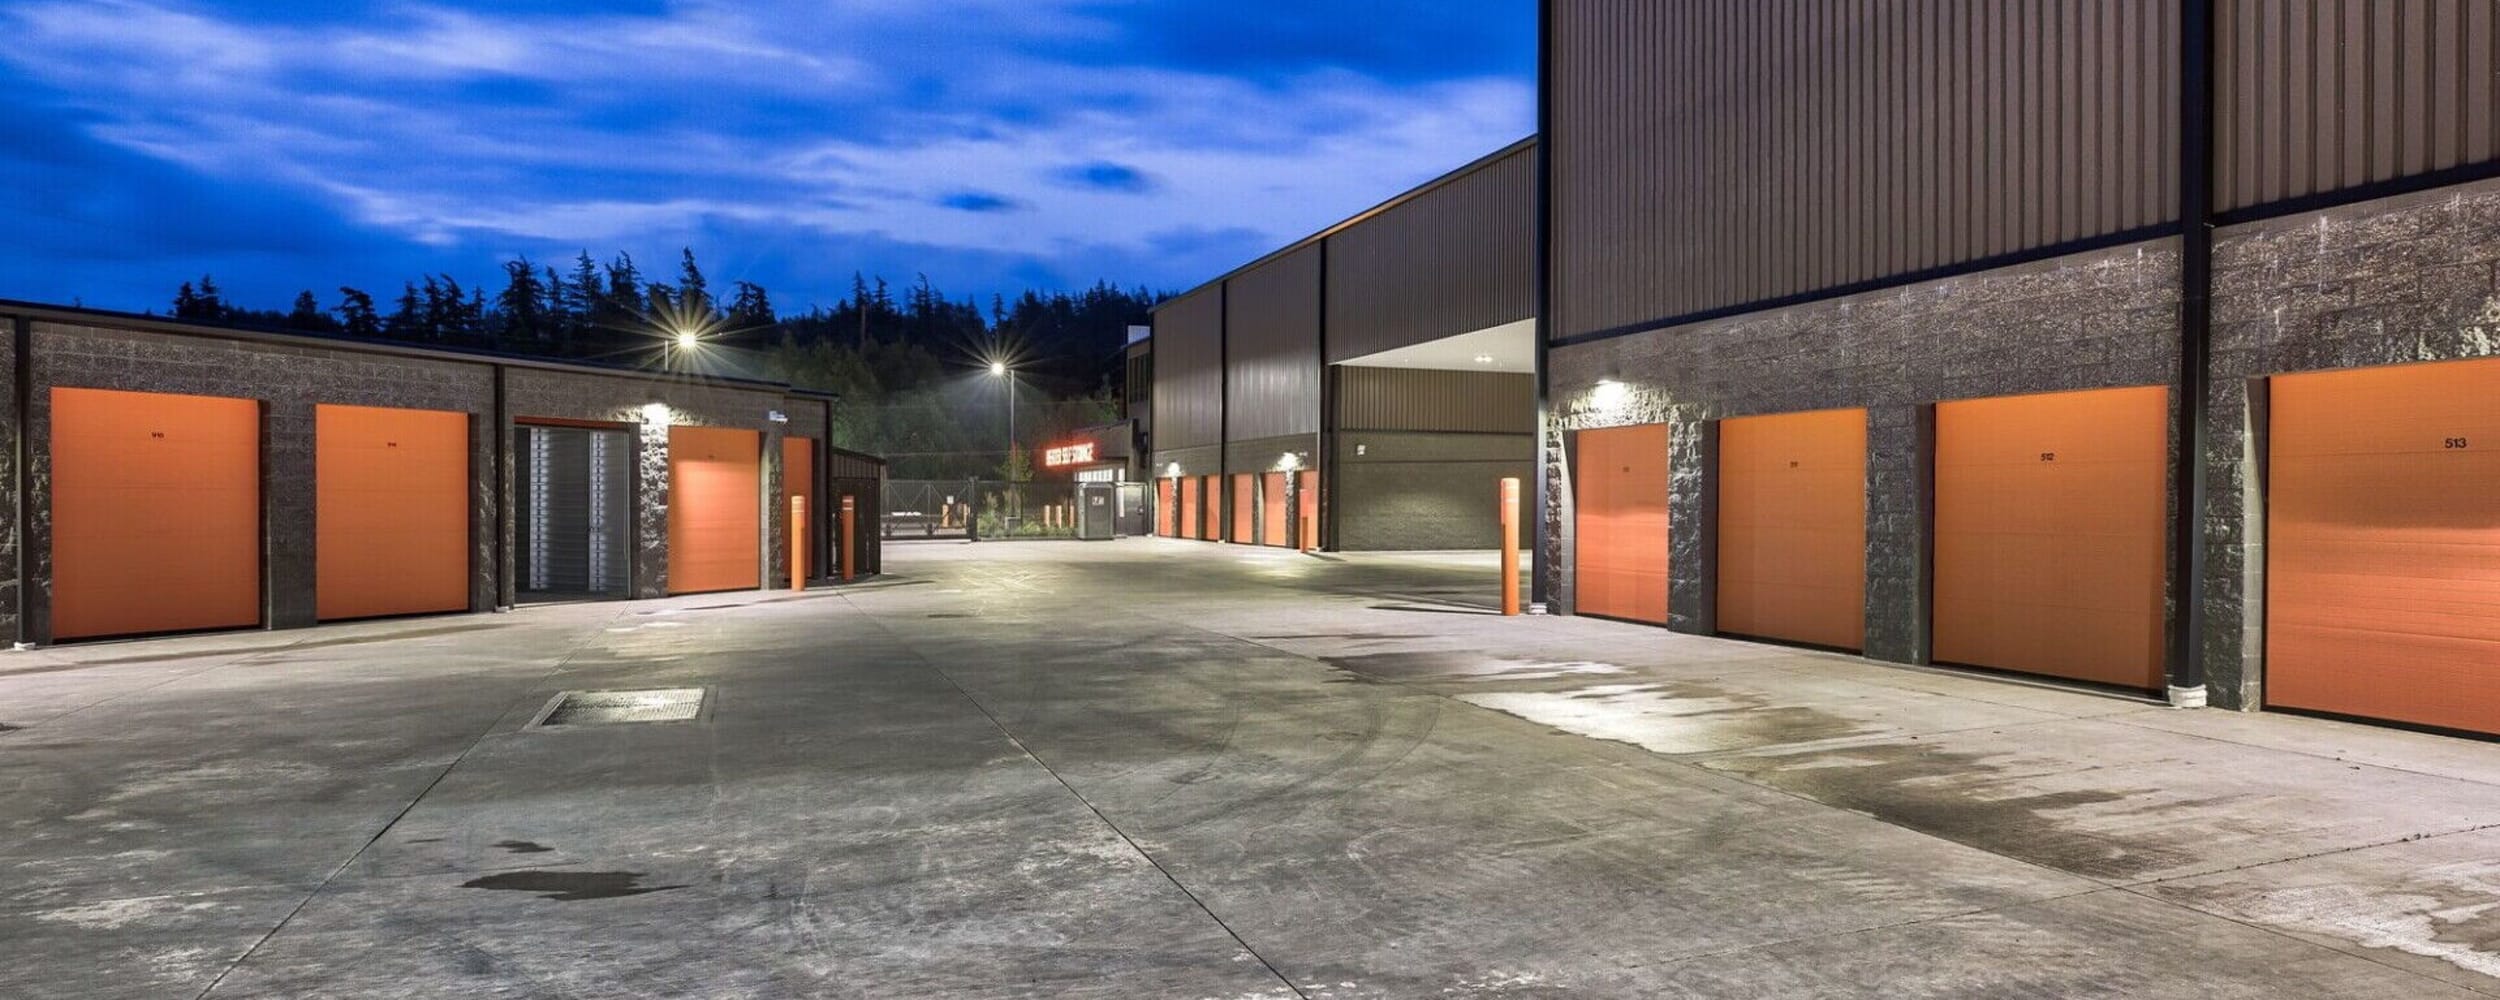 Exterior units with orange doors at Advanced Heated Self Storage Bellingham in Bellingham, Washington